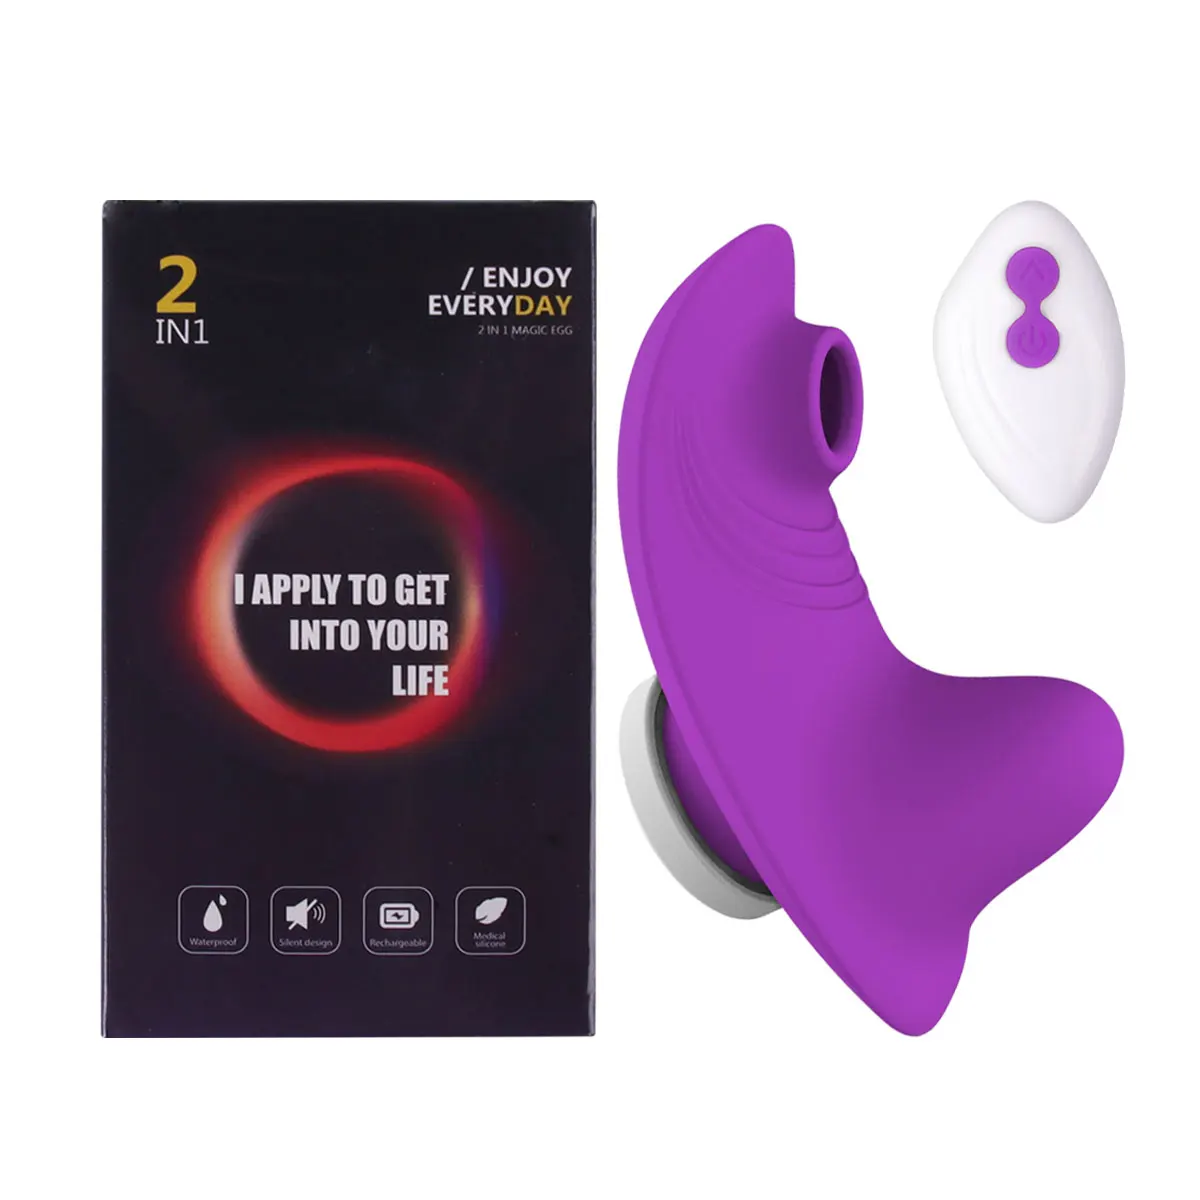 Purple Vibrator